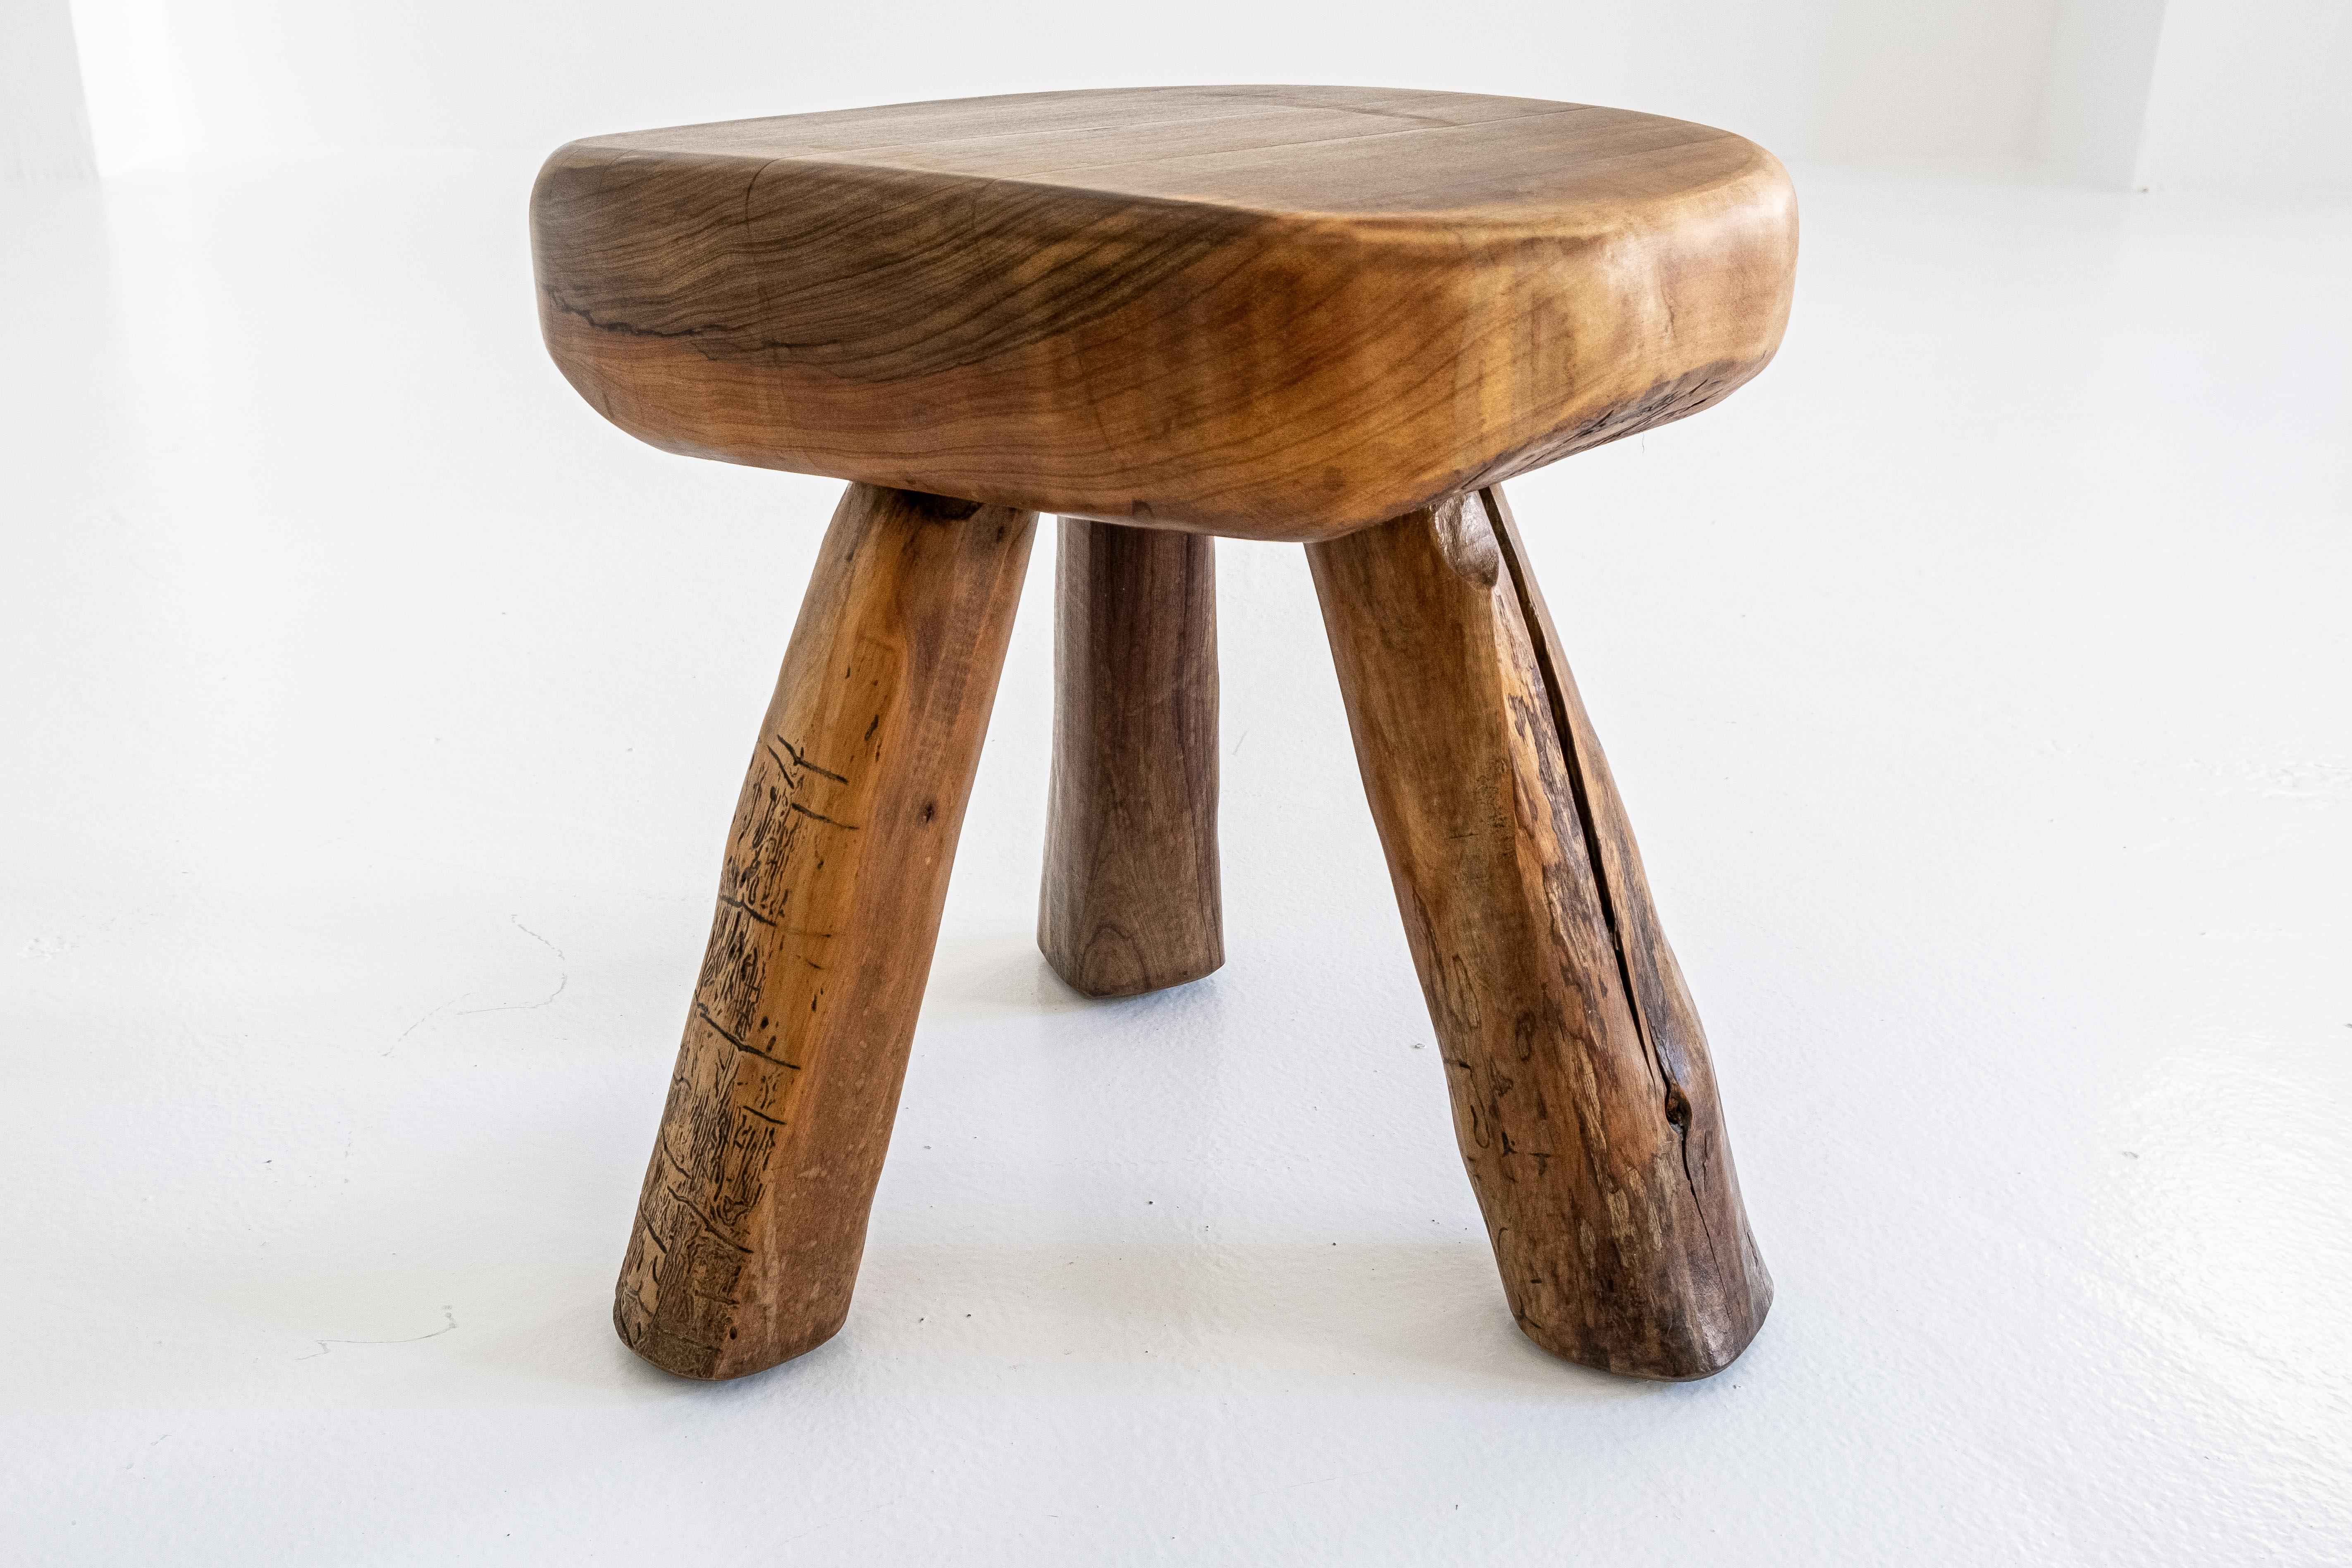 Handmade, Rustic, Sculptural, Massiv Olive Wood Tripod Stool or Side Table 2